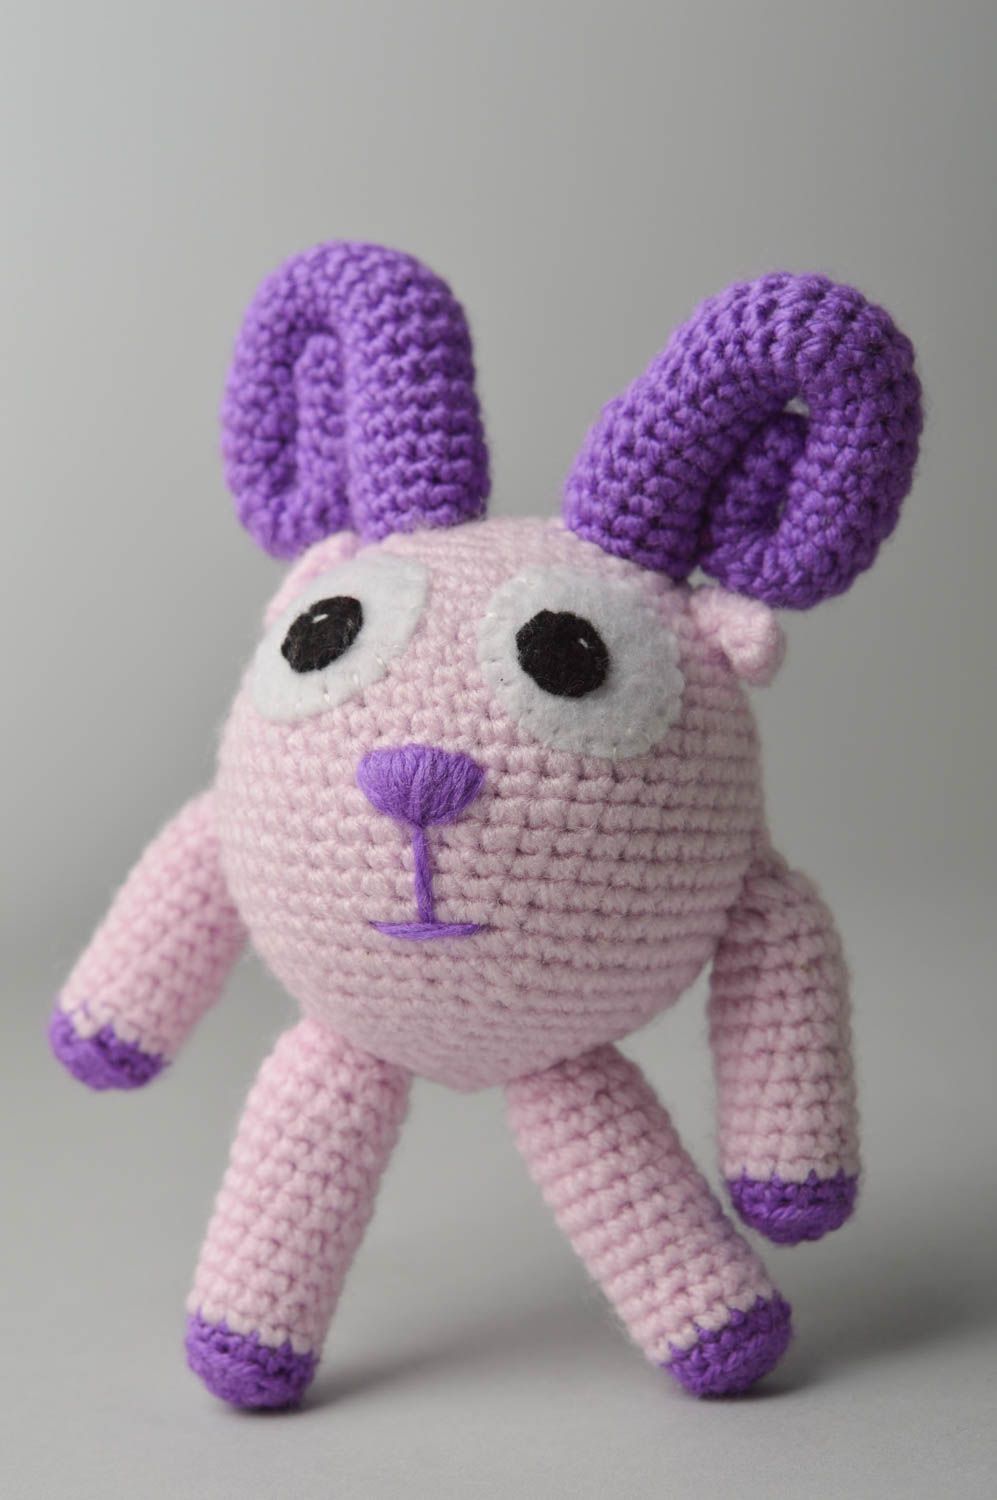 Muñeco de ganchillo juguete tejido a crochet hecho a mano regalo original foto 3